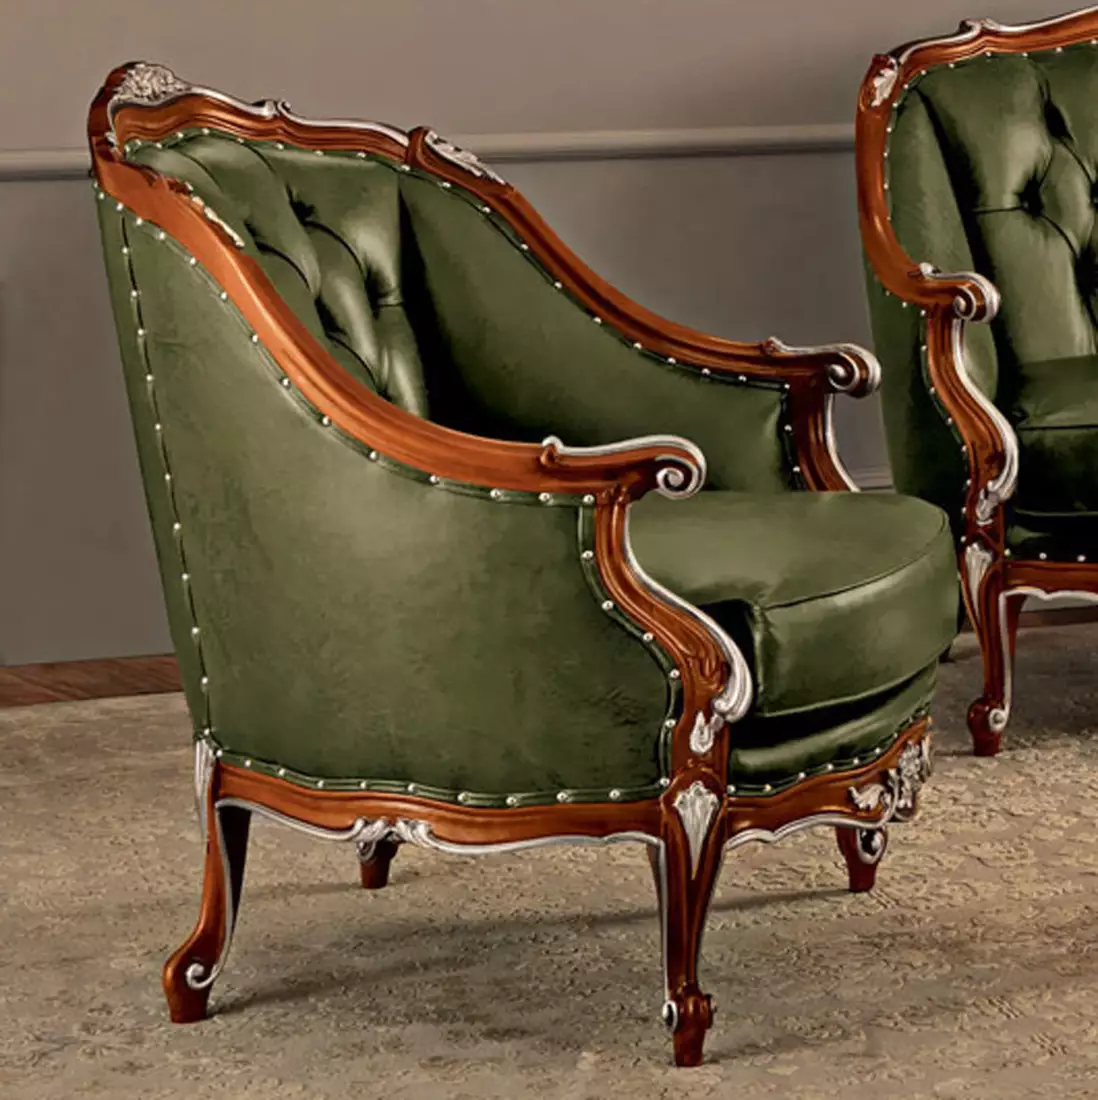 Tailormade-leather-armchair-and-sofa-Villa-Venezia-collection-Modenese-Gastonegfd---kopie11